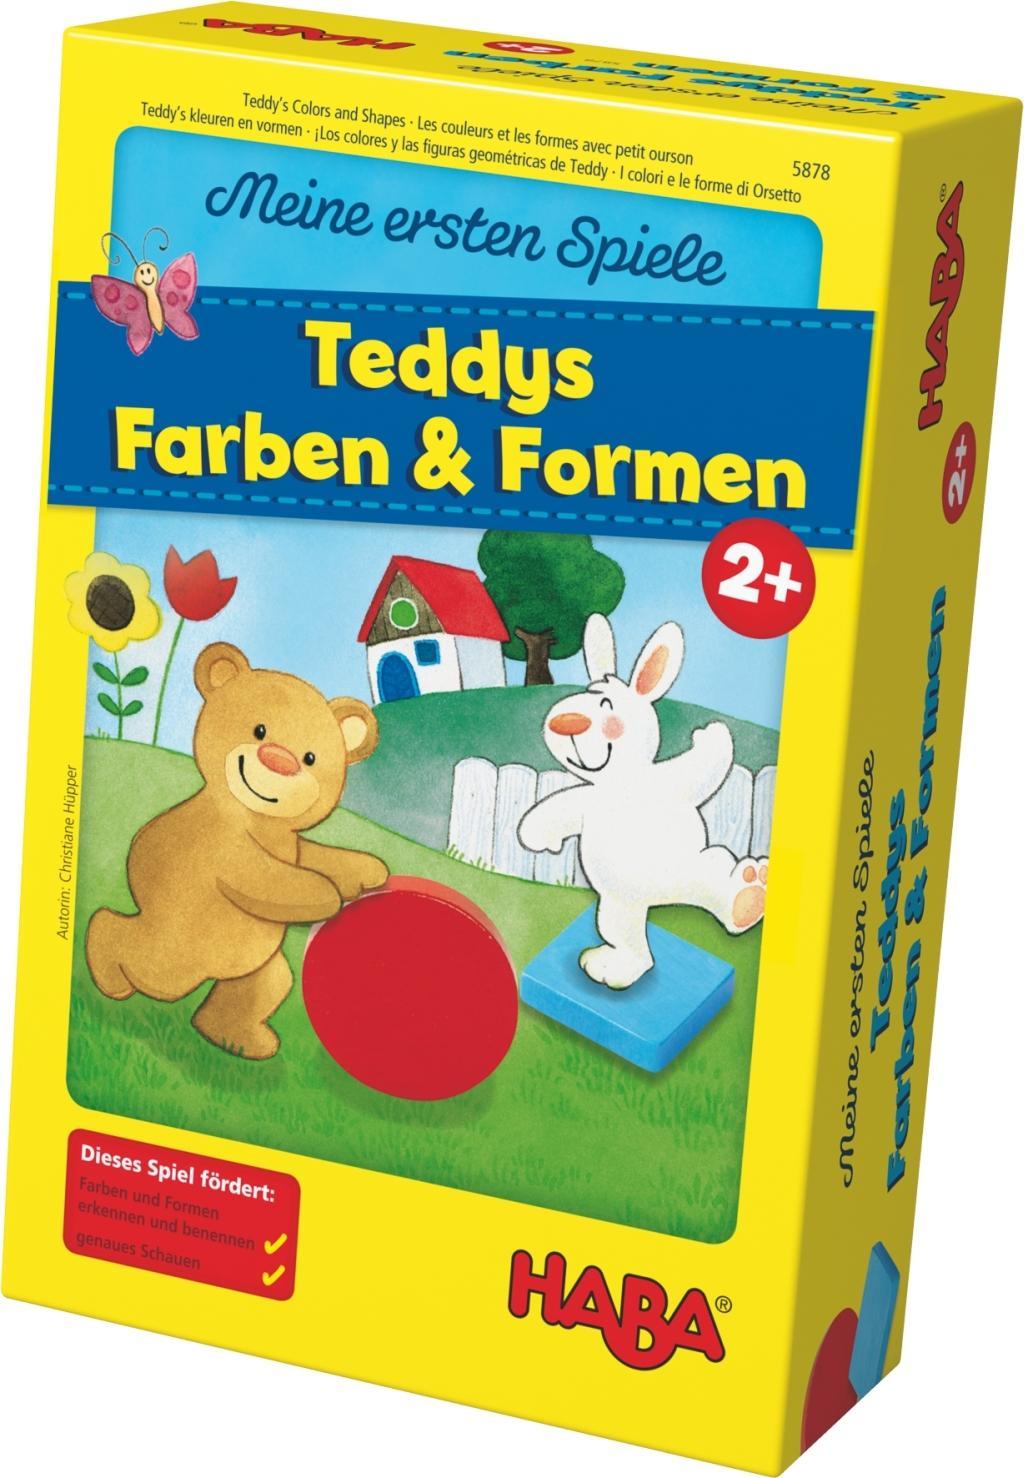 Teddys Farben & Formen (Kinderspiel)